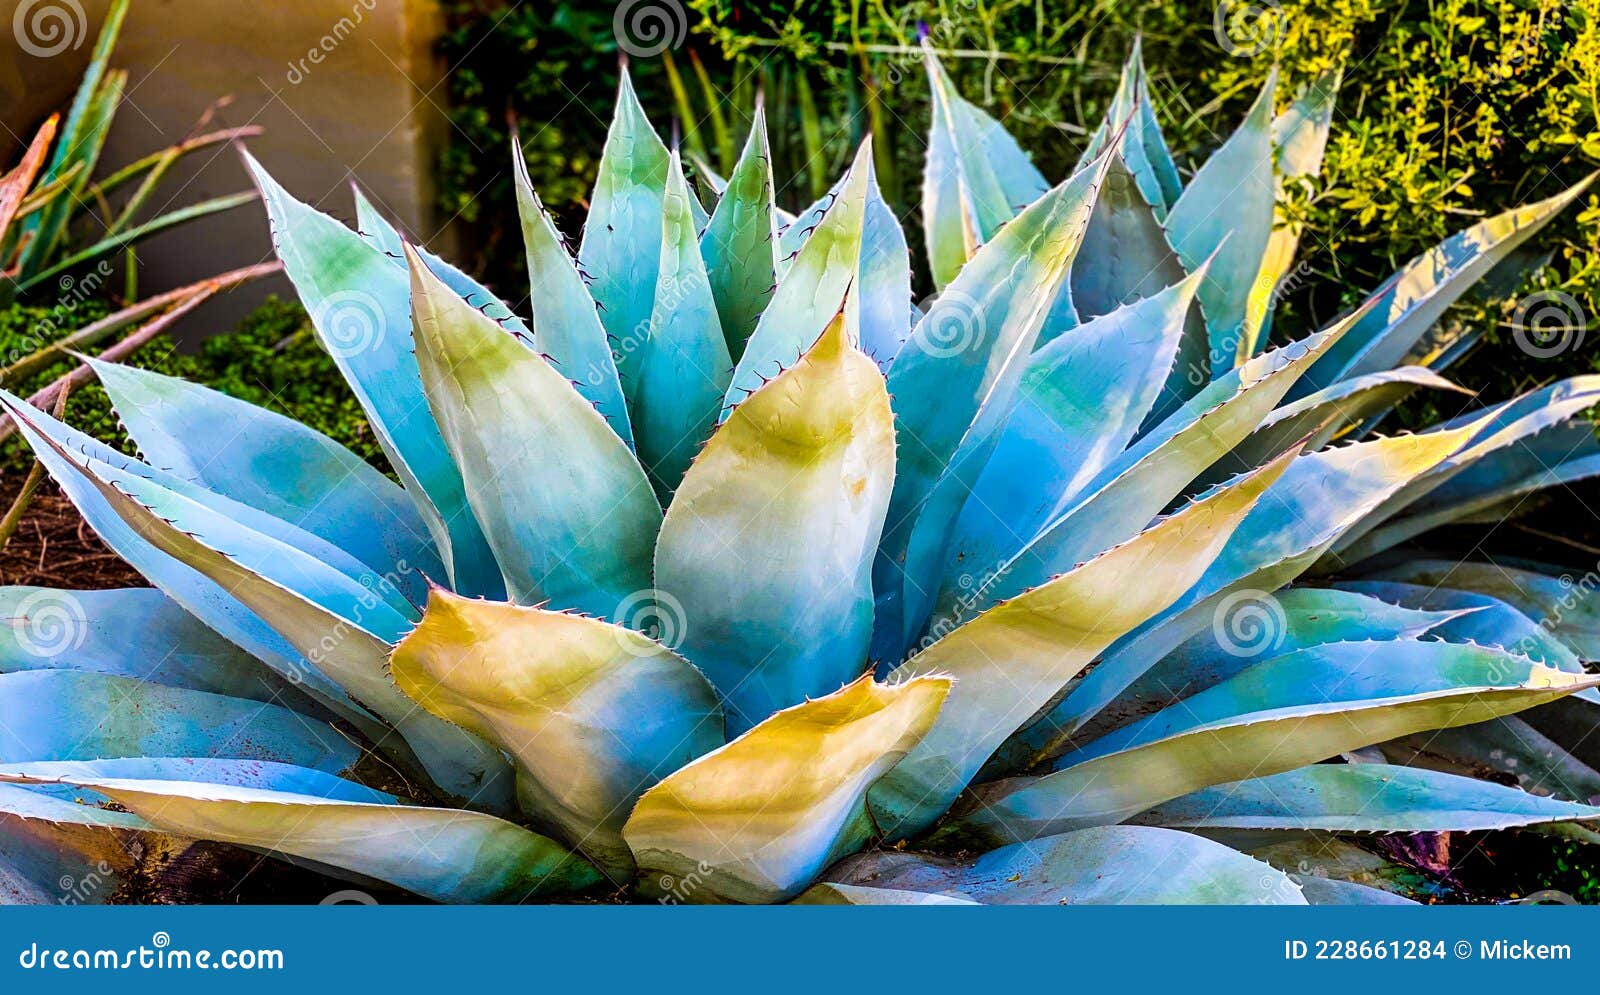 Blue Agave Cactus in Desert Garden Stock Photo - Image of leaves, green:  228661284